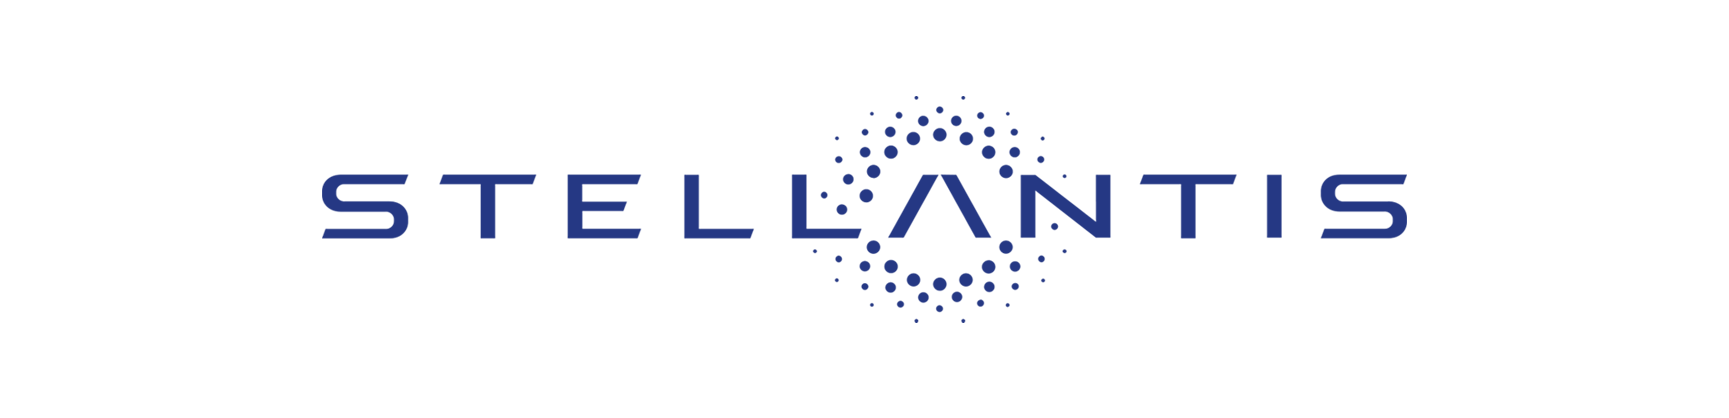 Immagine di Stellantis logo